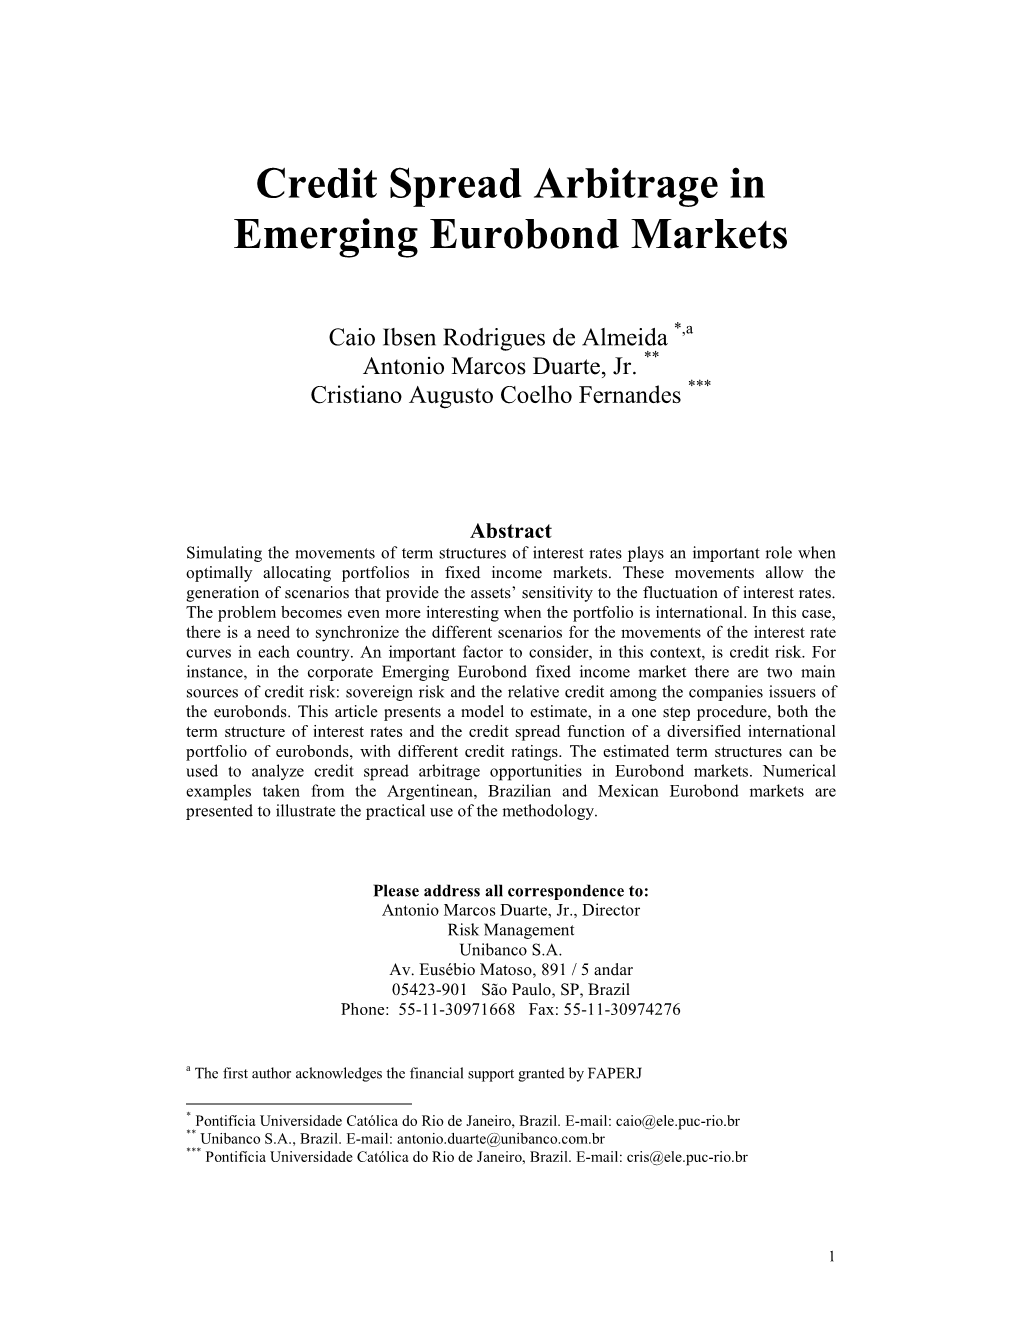 Credit Spread Arbitrage in Emerging Eurobond Markets